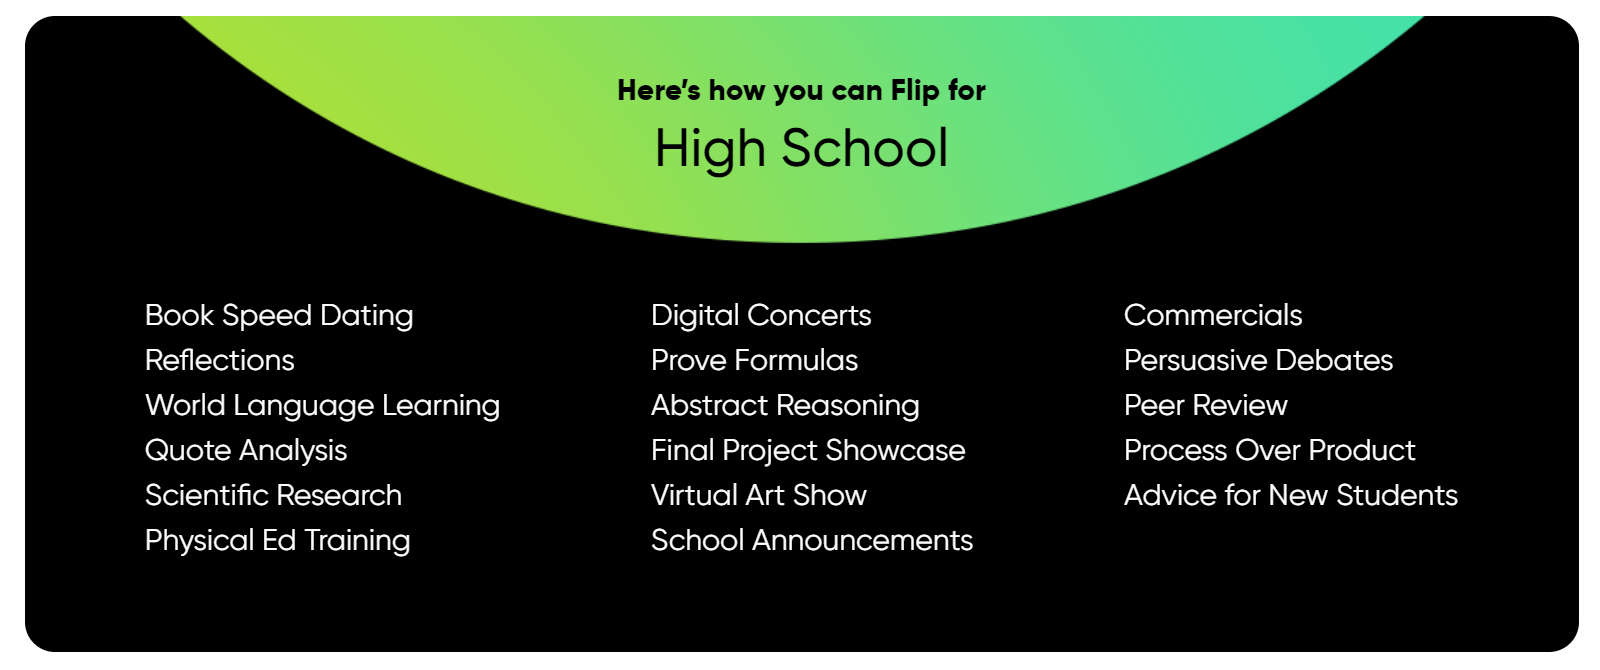 Ways to Use Flip in High School